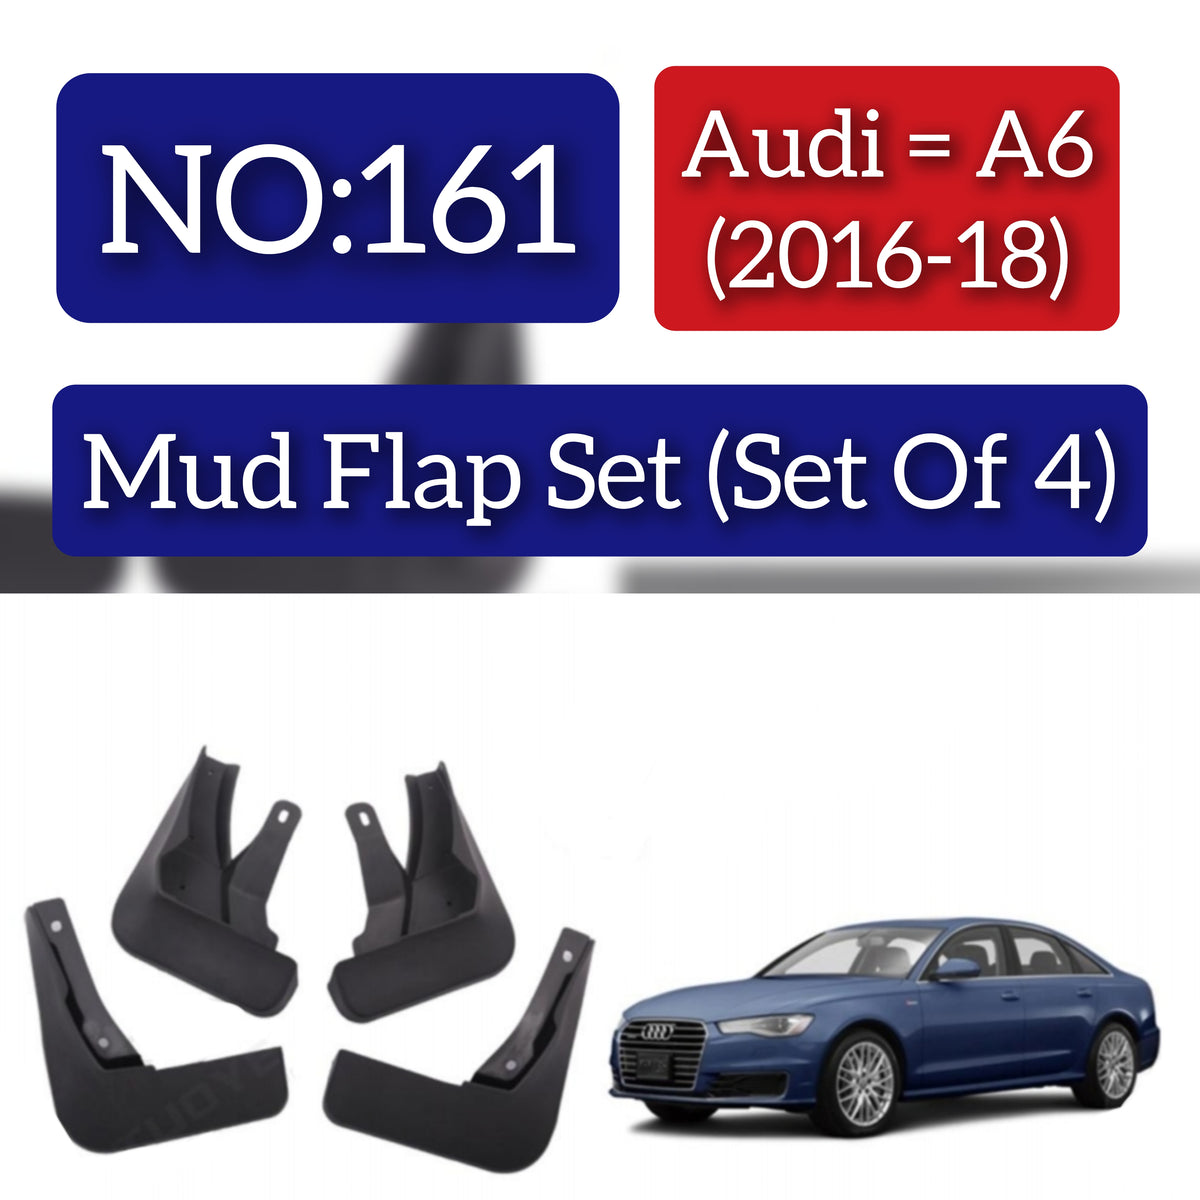 Audi A6 (2016-18) Mud Flap Set (Set of 4)Tag 161